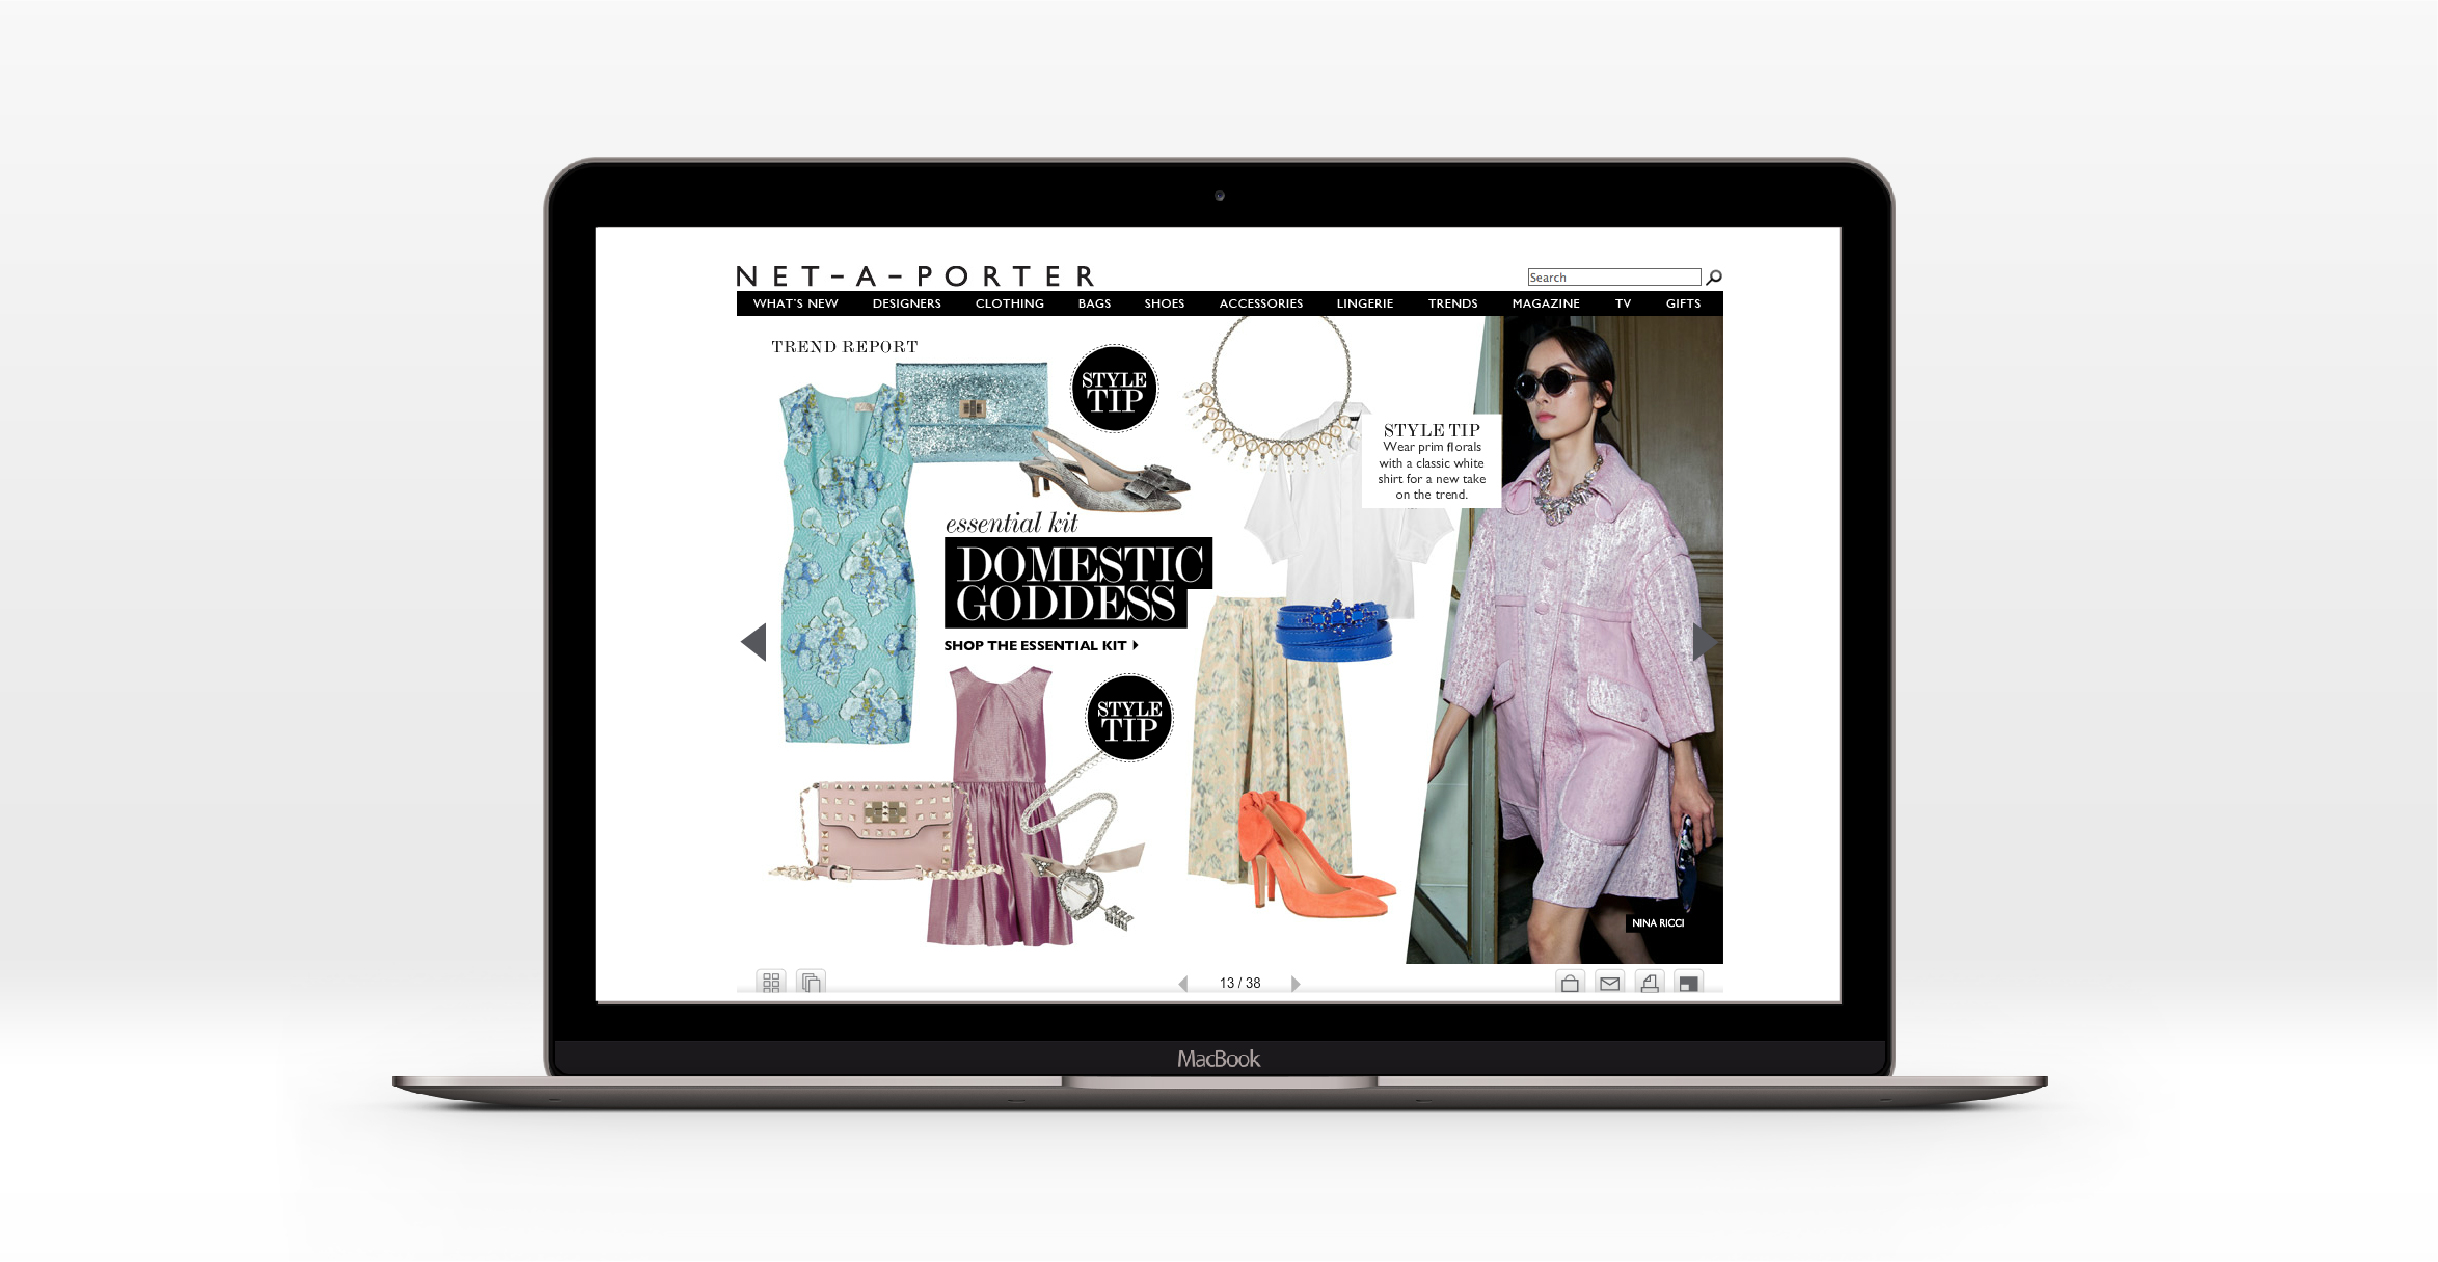 Online magazine design for luxury fashion e-commerce retailer Net-A-Porter